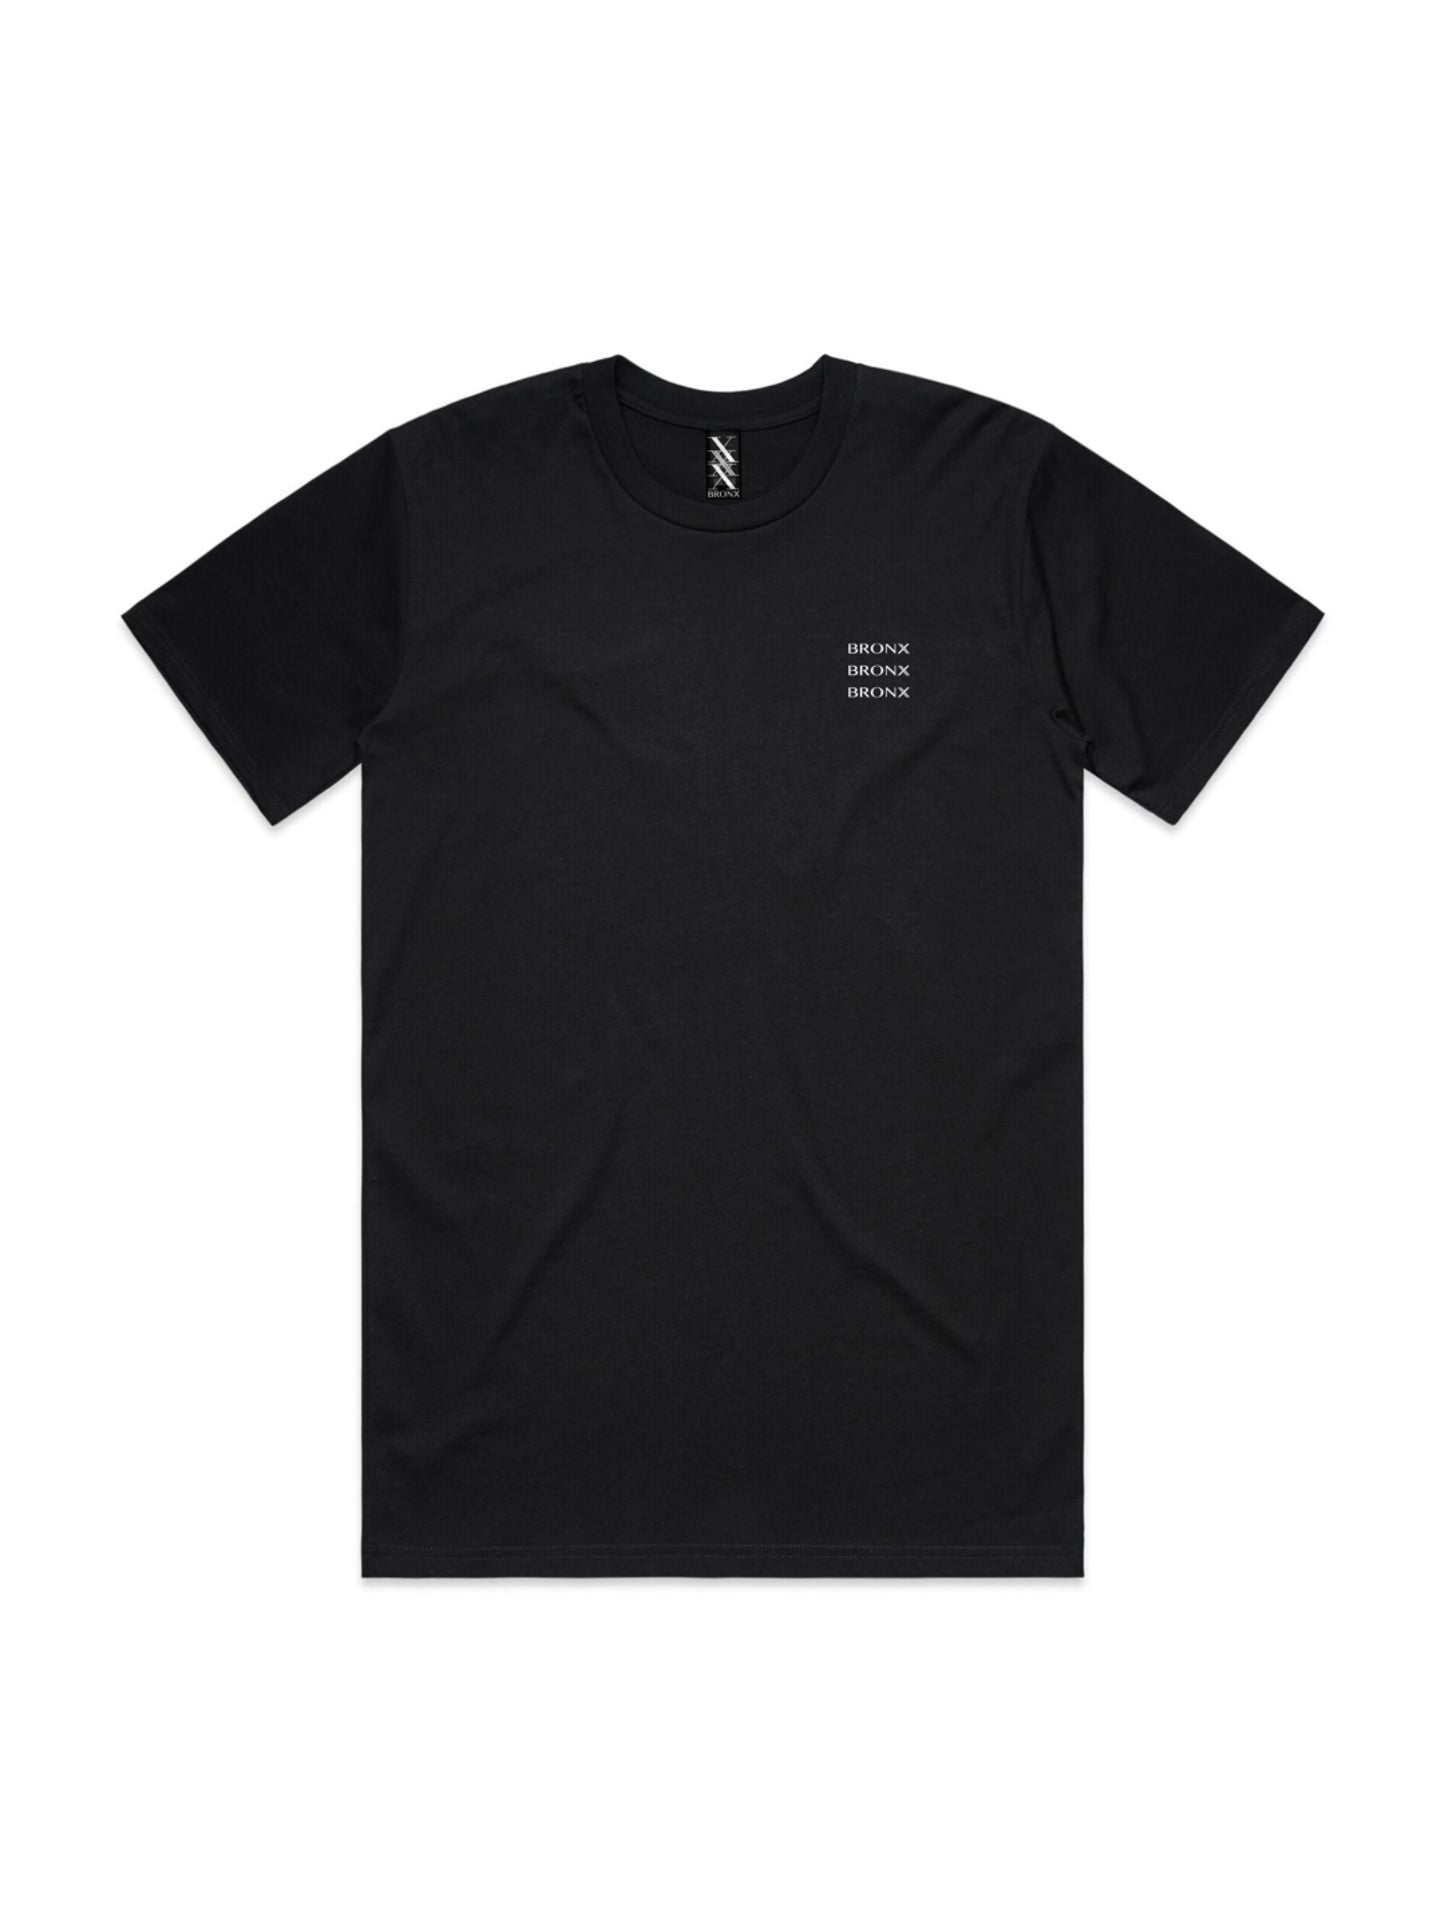 'Entitled' T-Shirt - Black